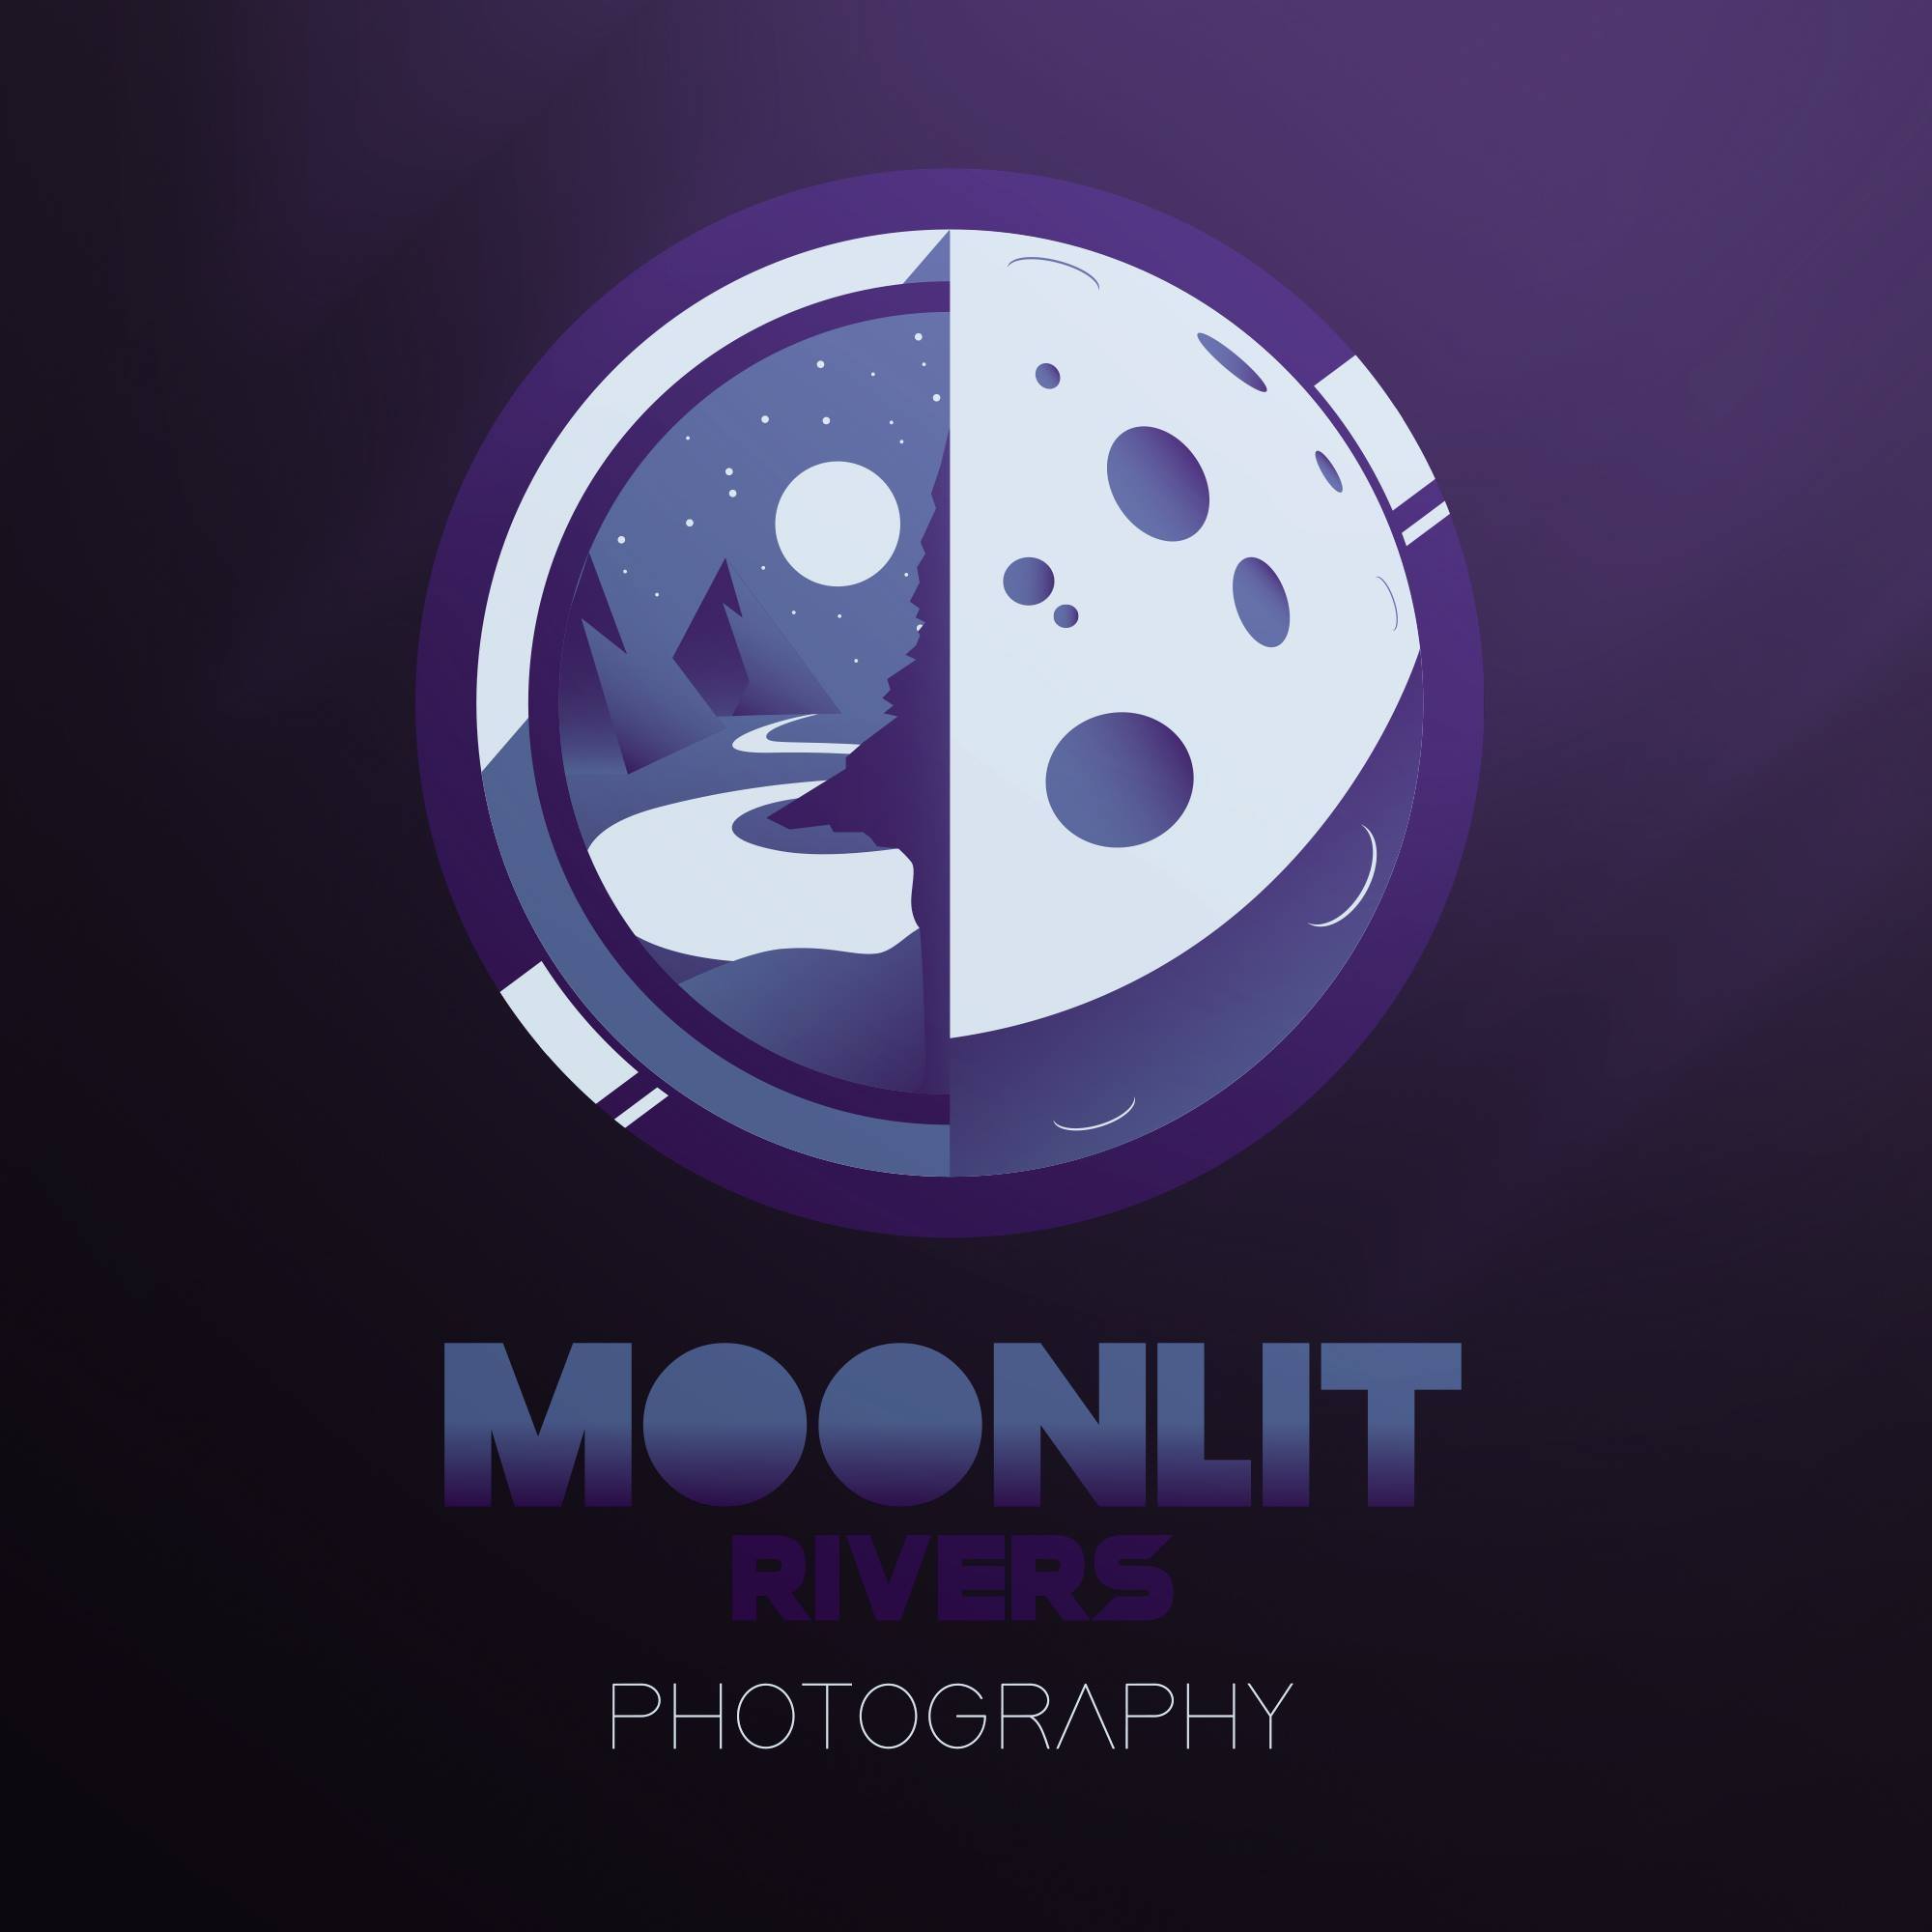 Moonlit Rivers Photography